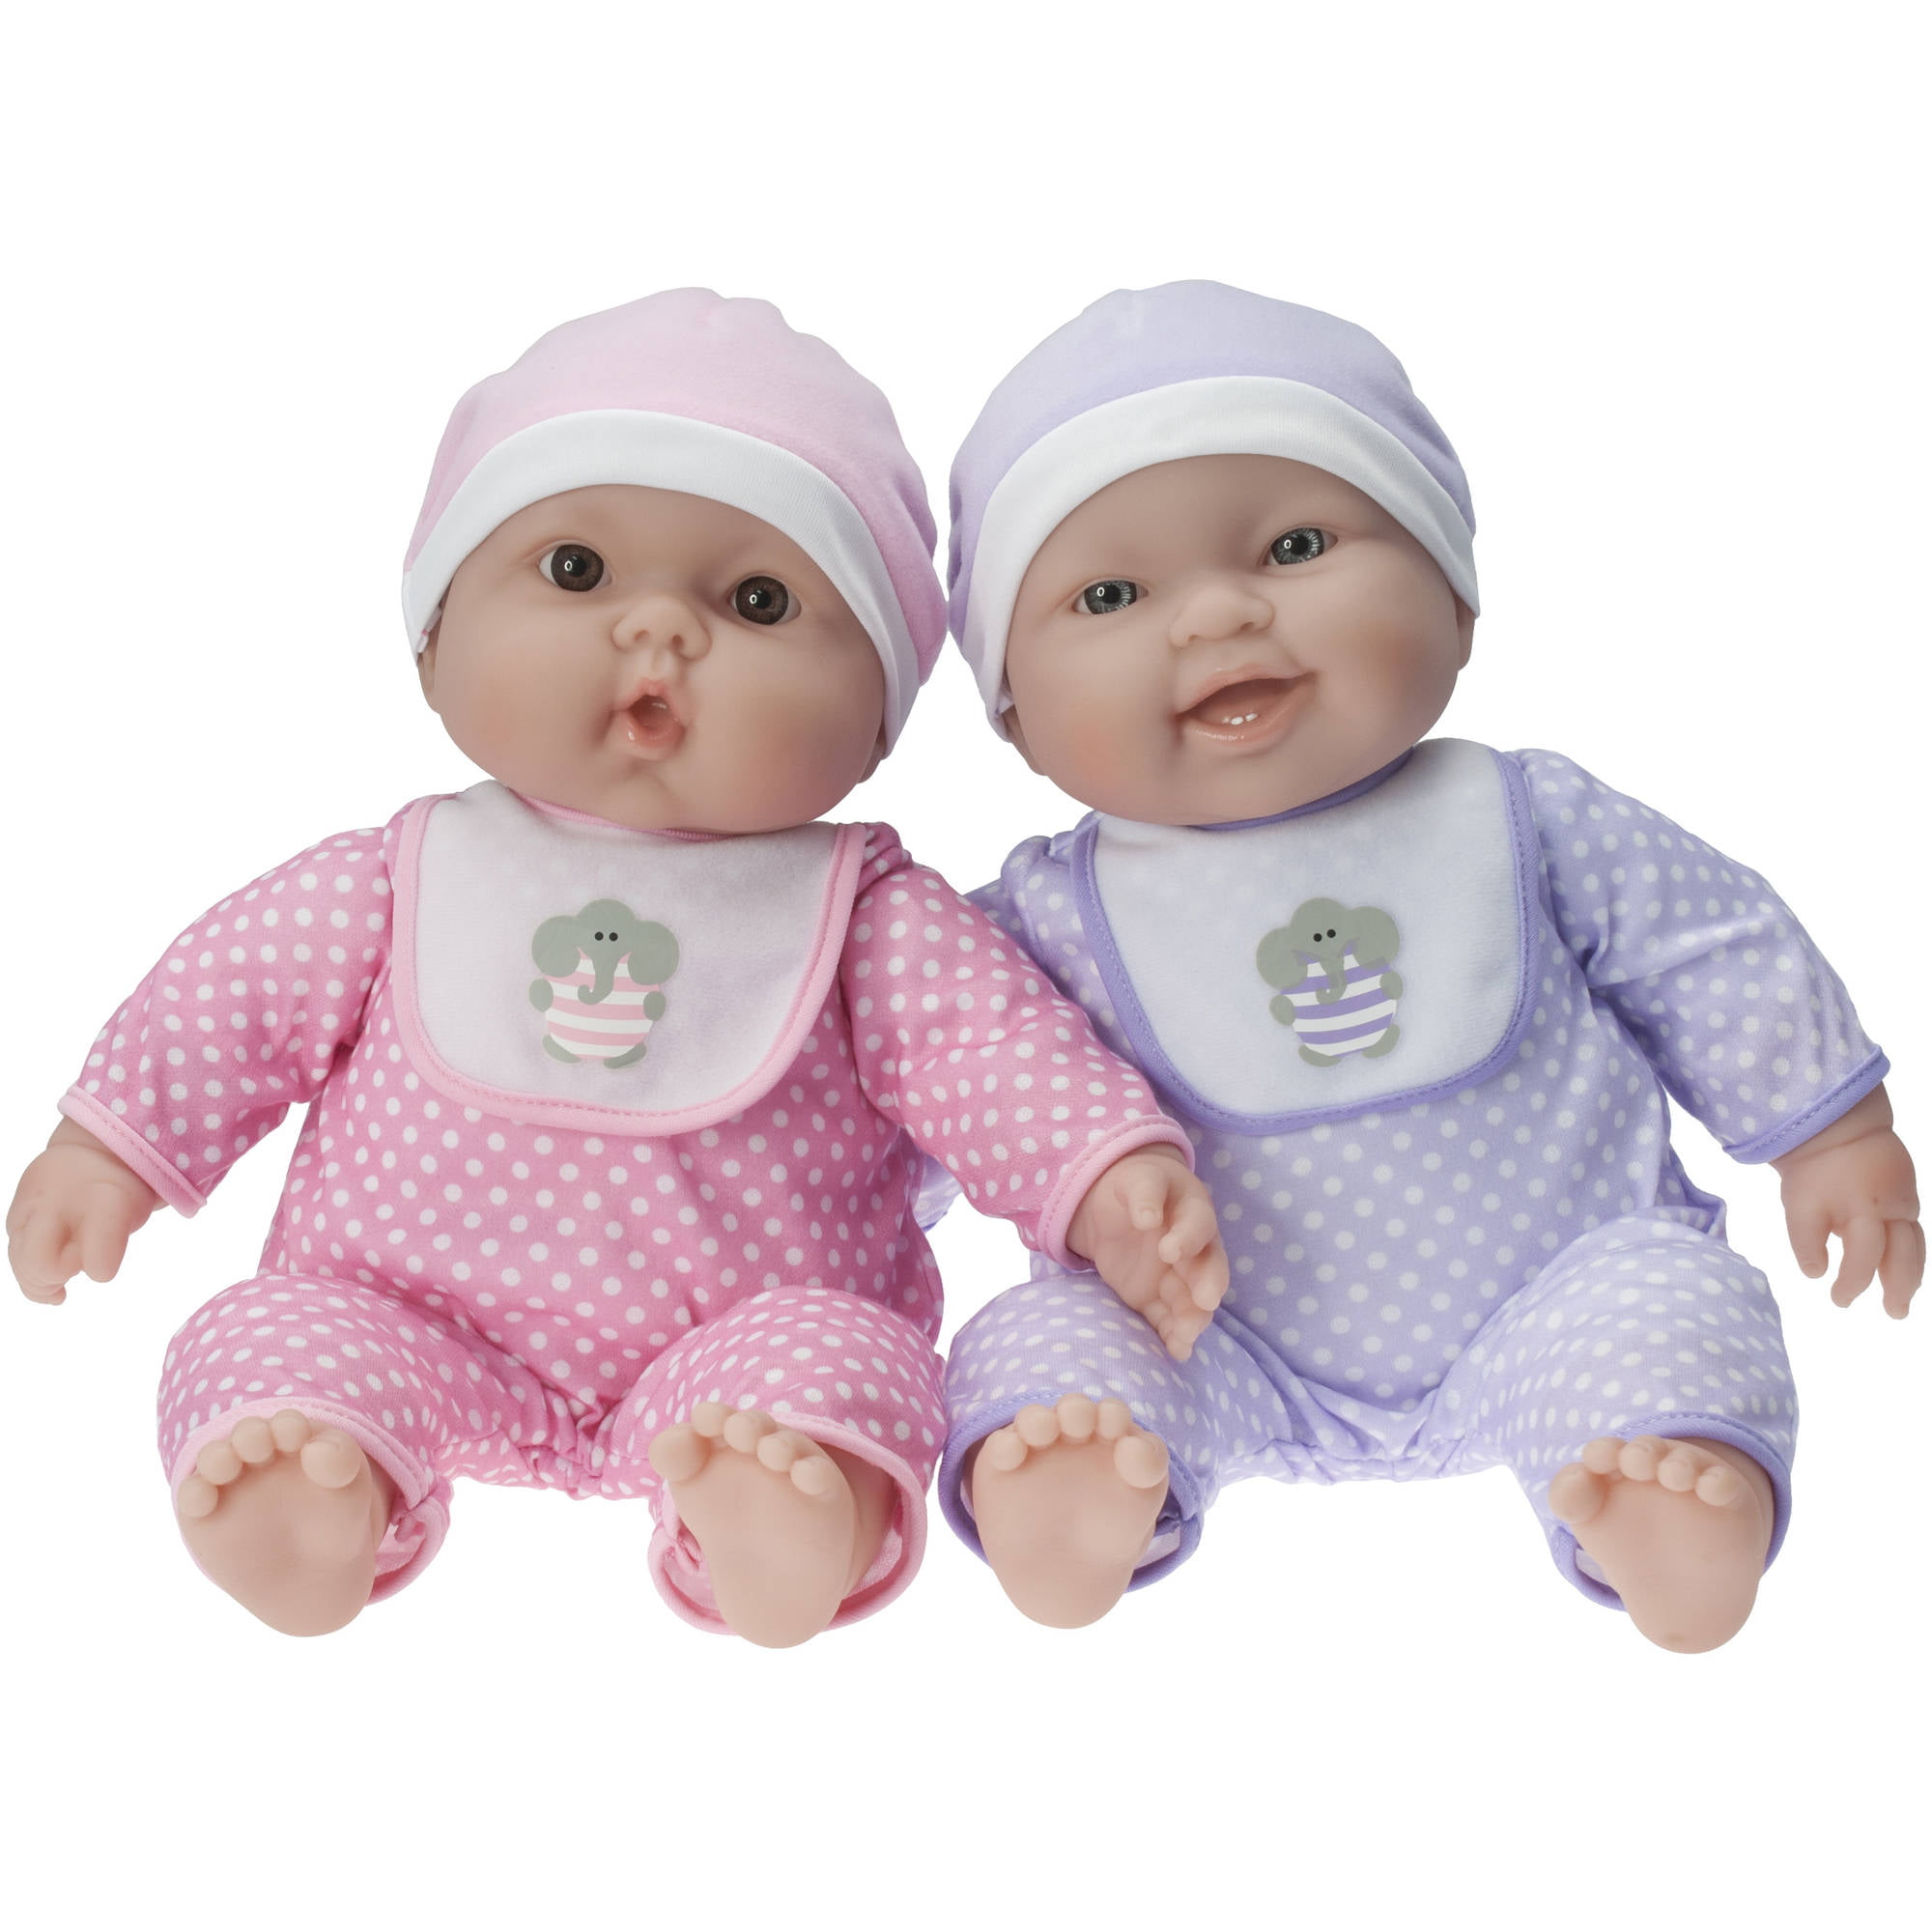 Realistic Silicone Babies - Walmart.com